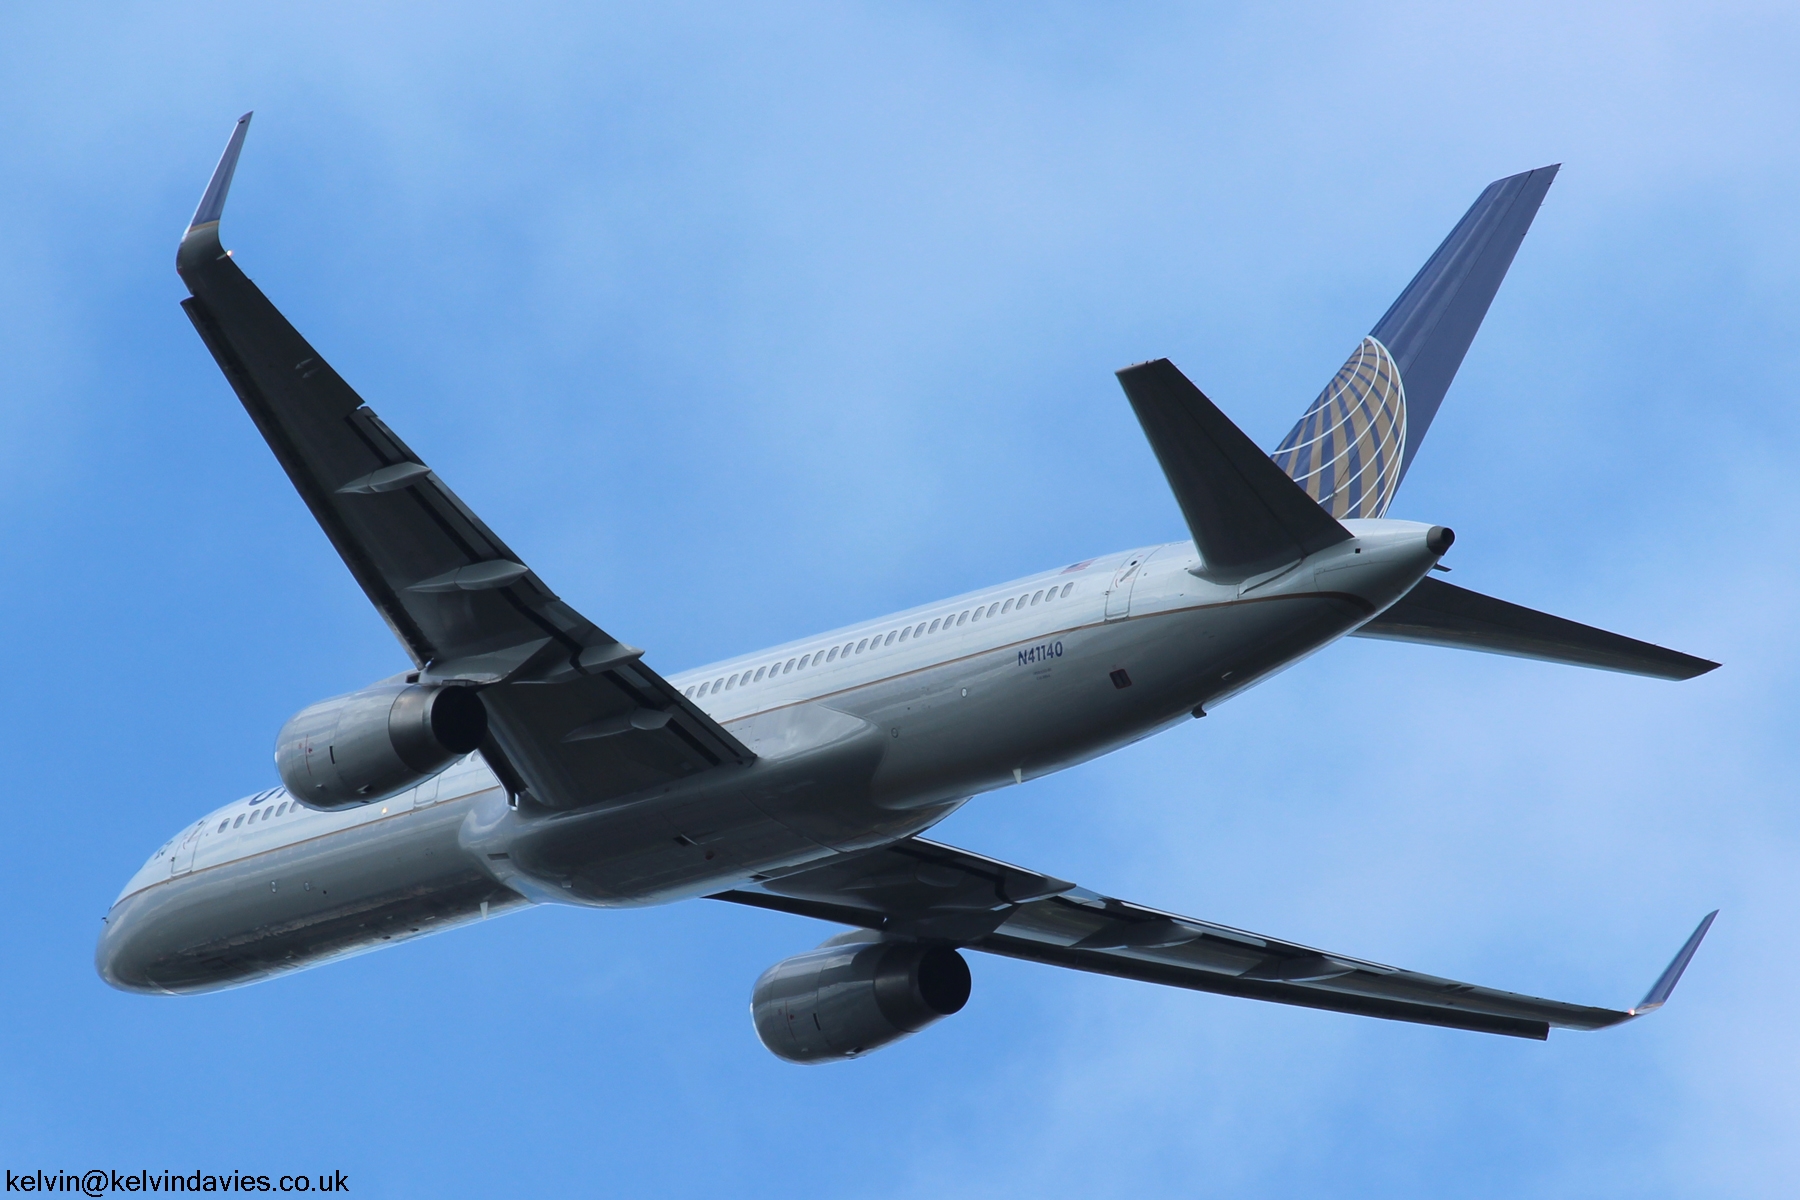 United Airlines 757 N41140